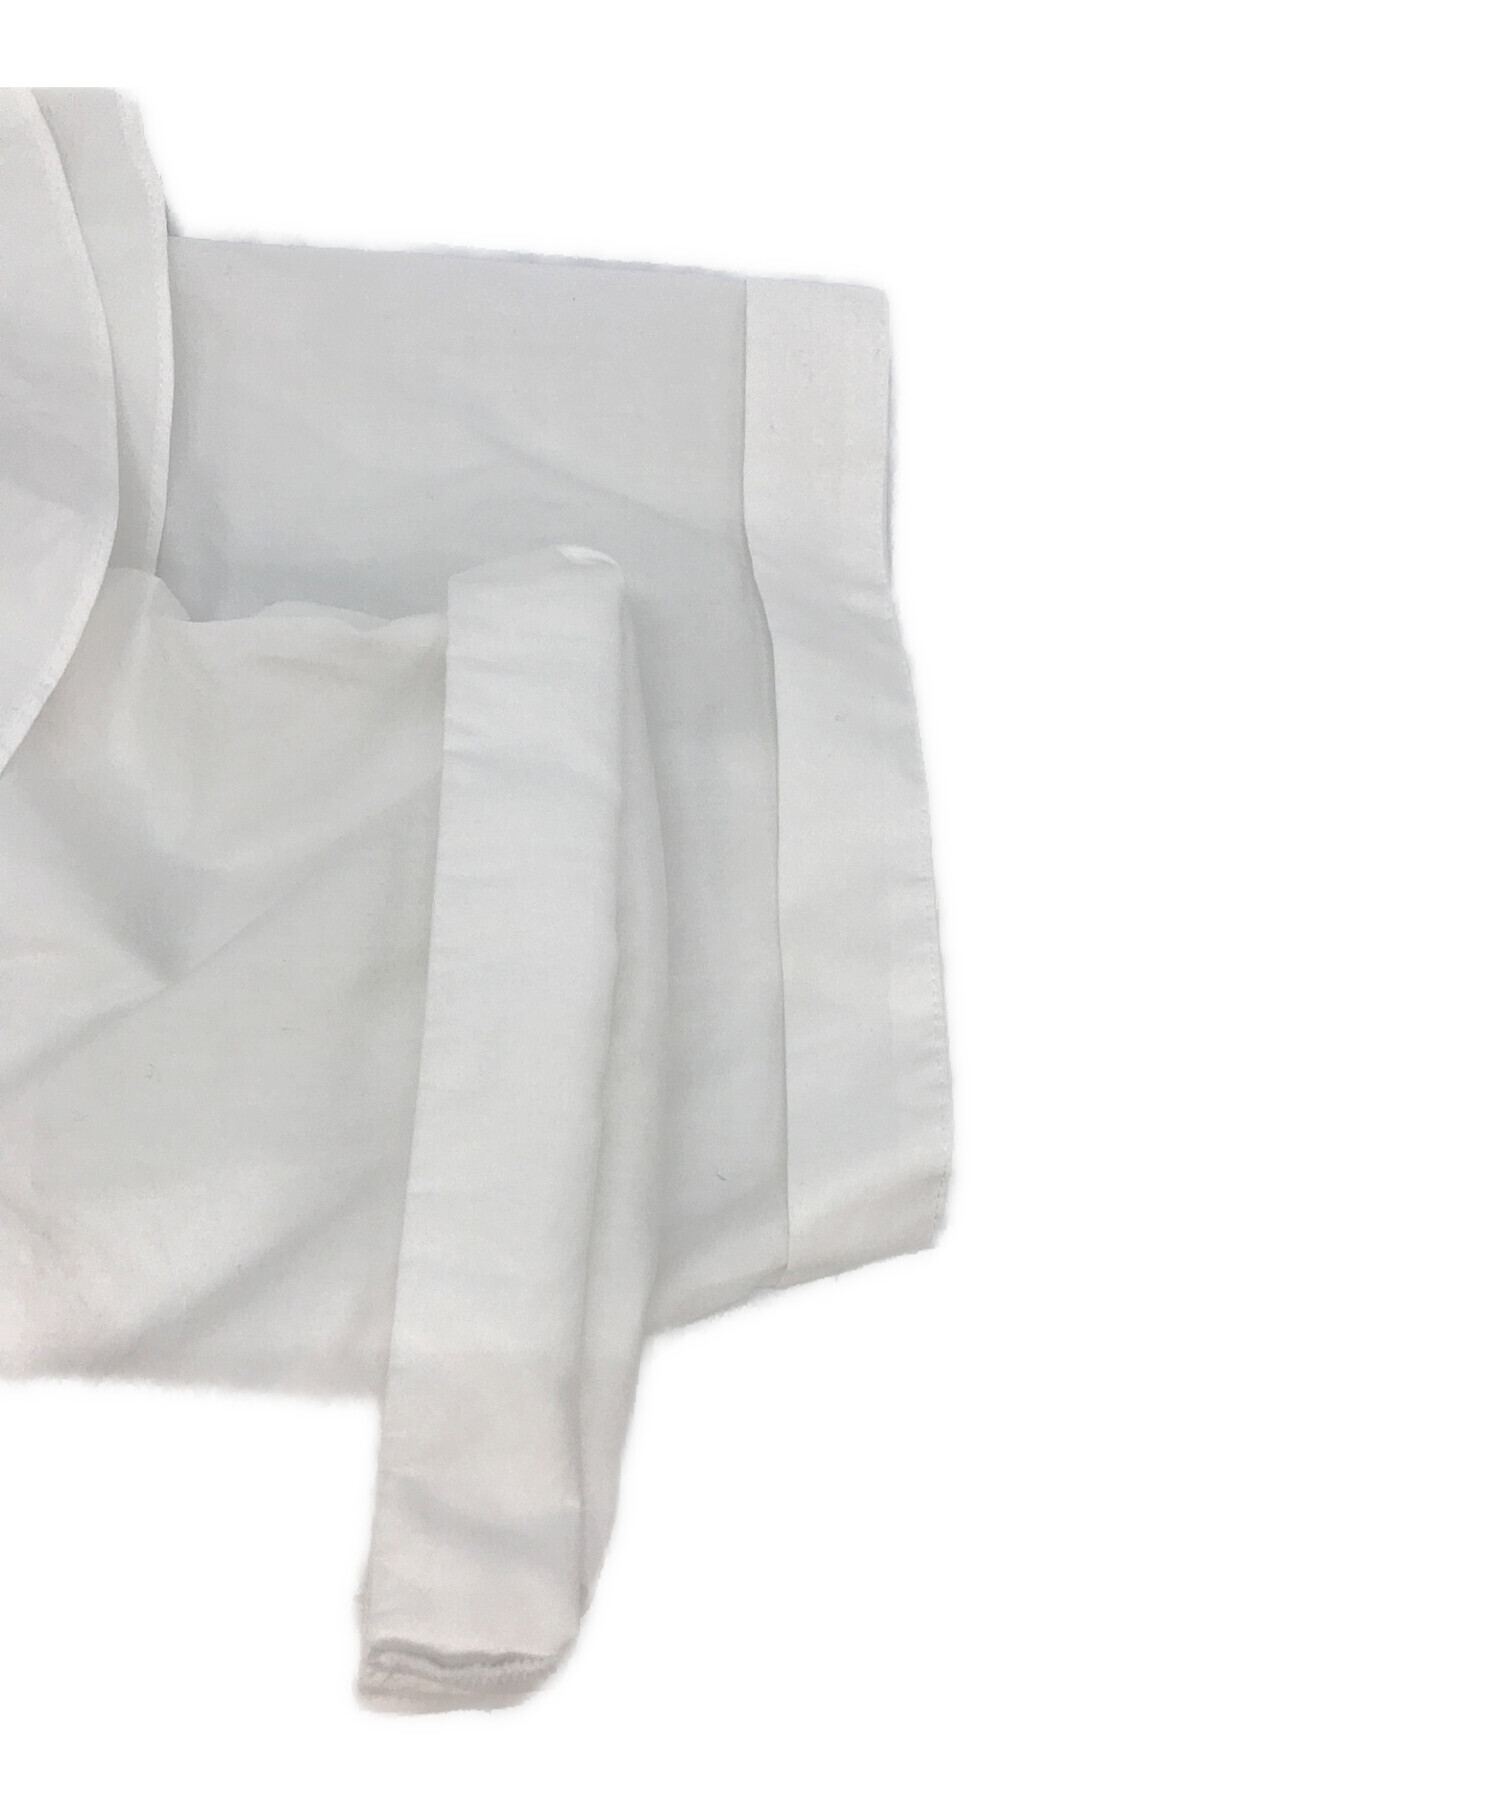 CADUNE (カデュネ) フリルバンドカラーシャツ ホワイト サイズ:36